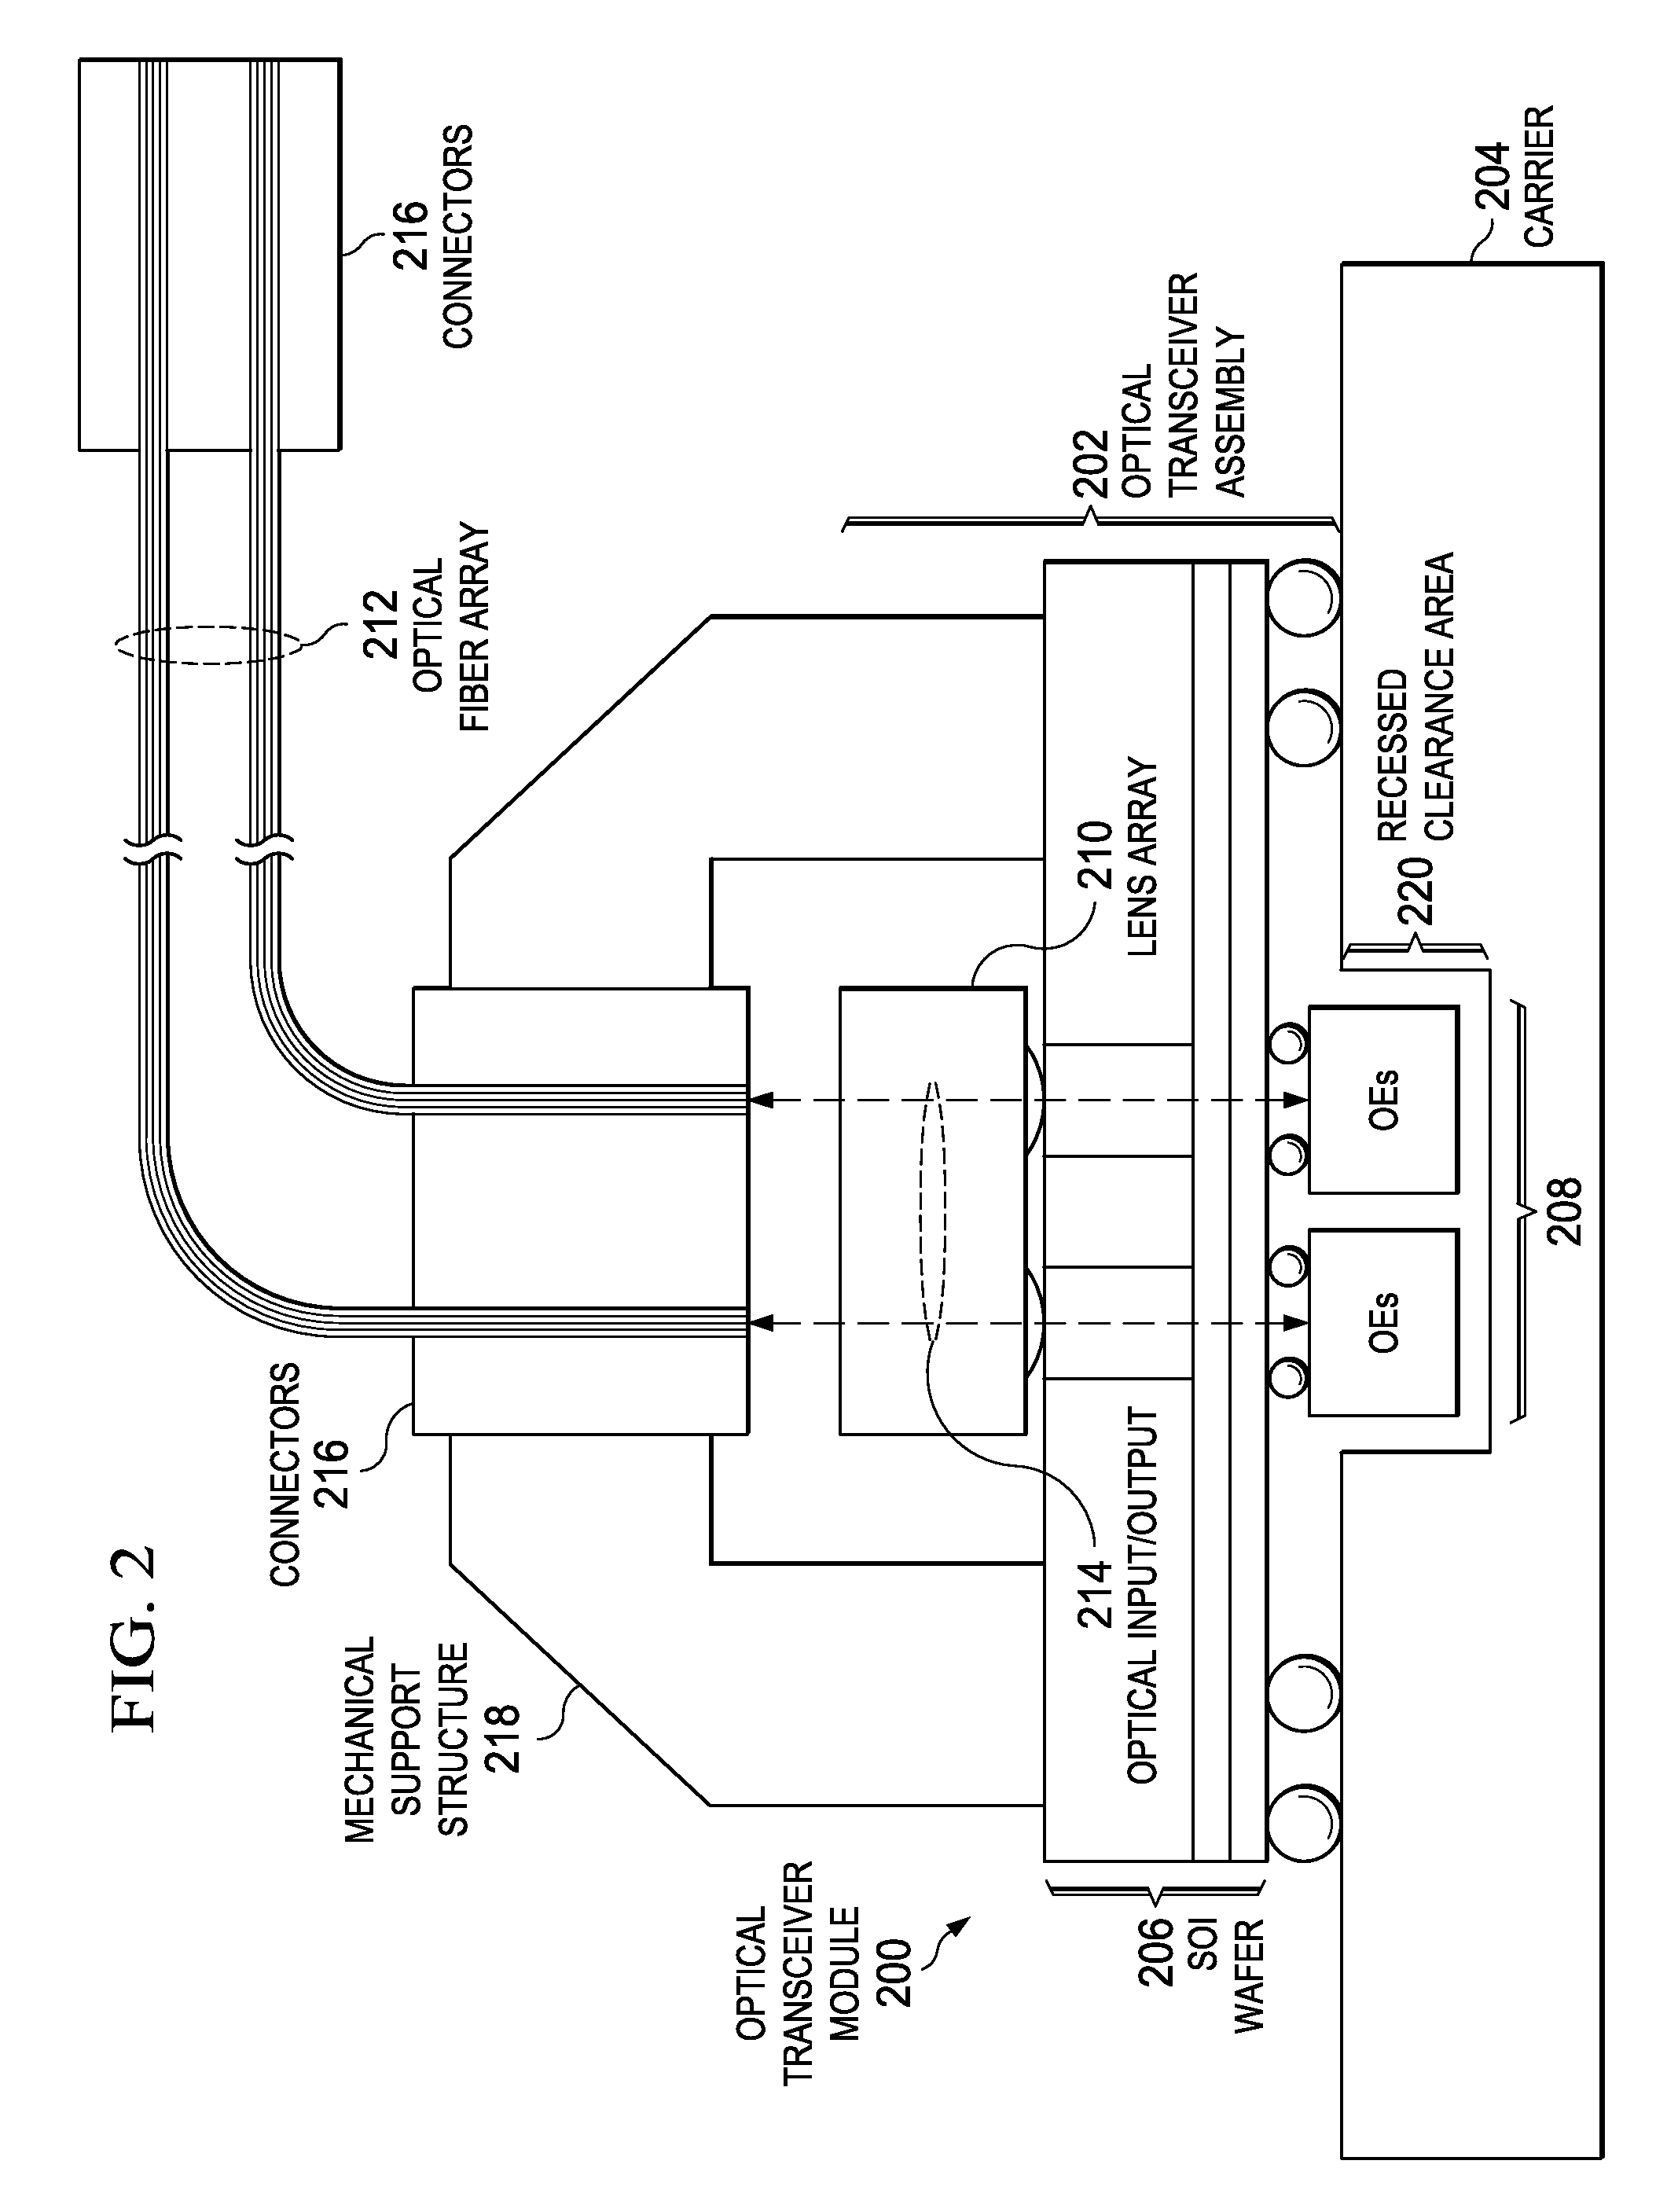 Parellel optical transceiver module